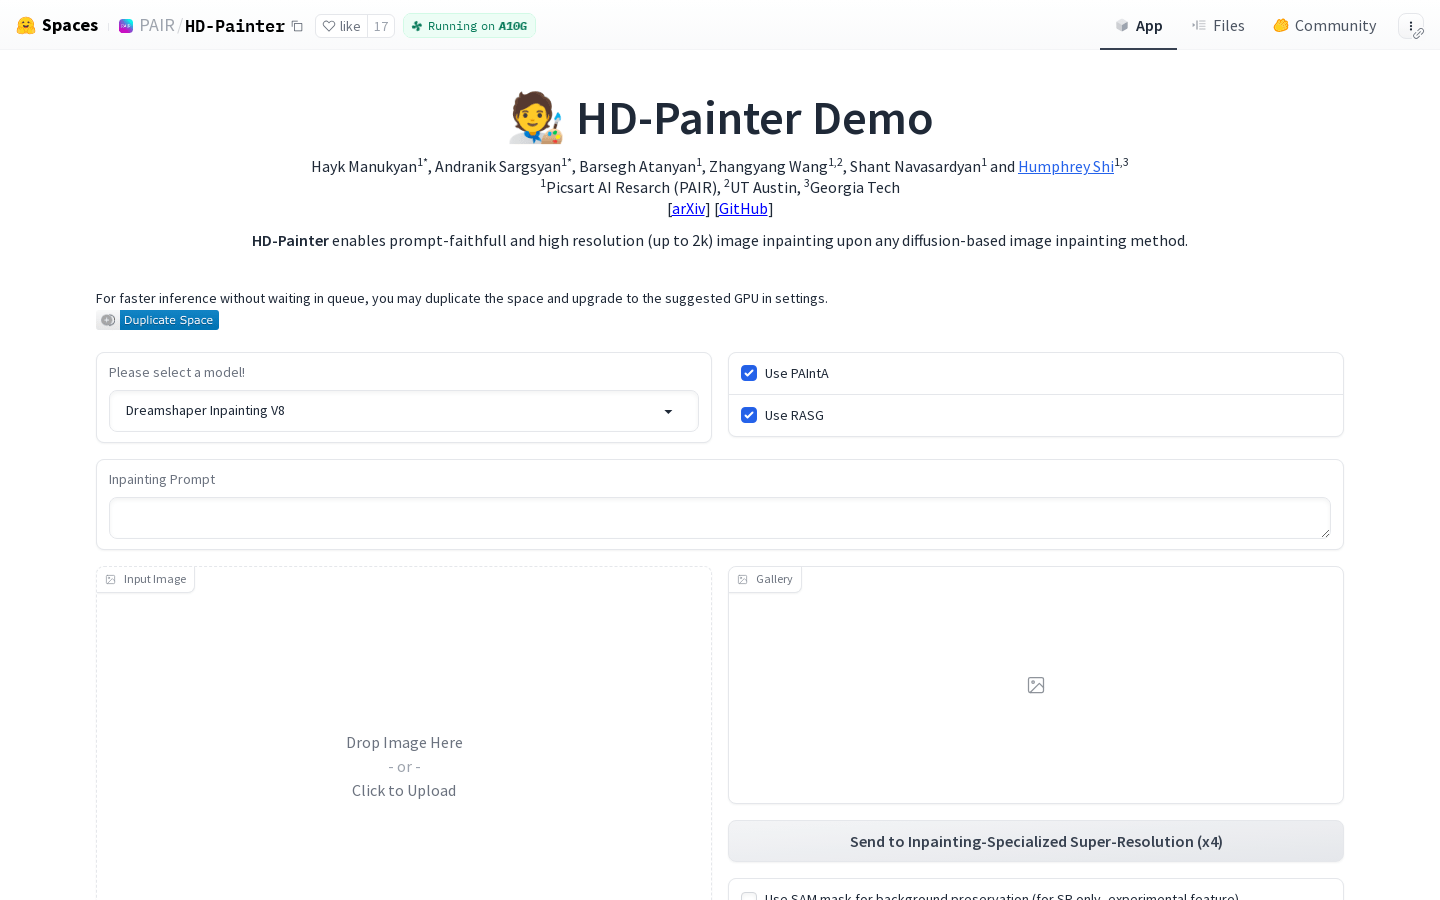 HD-Painter